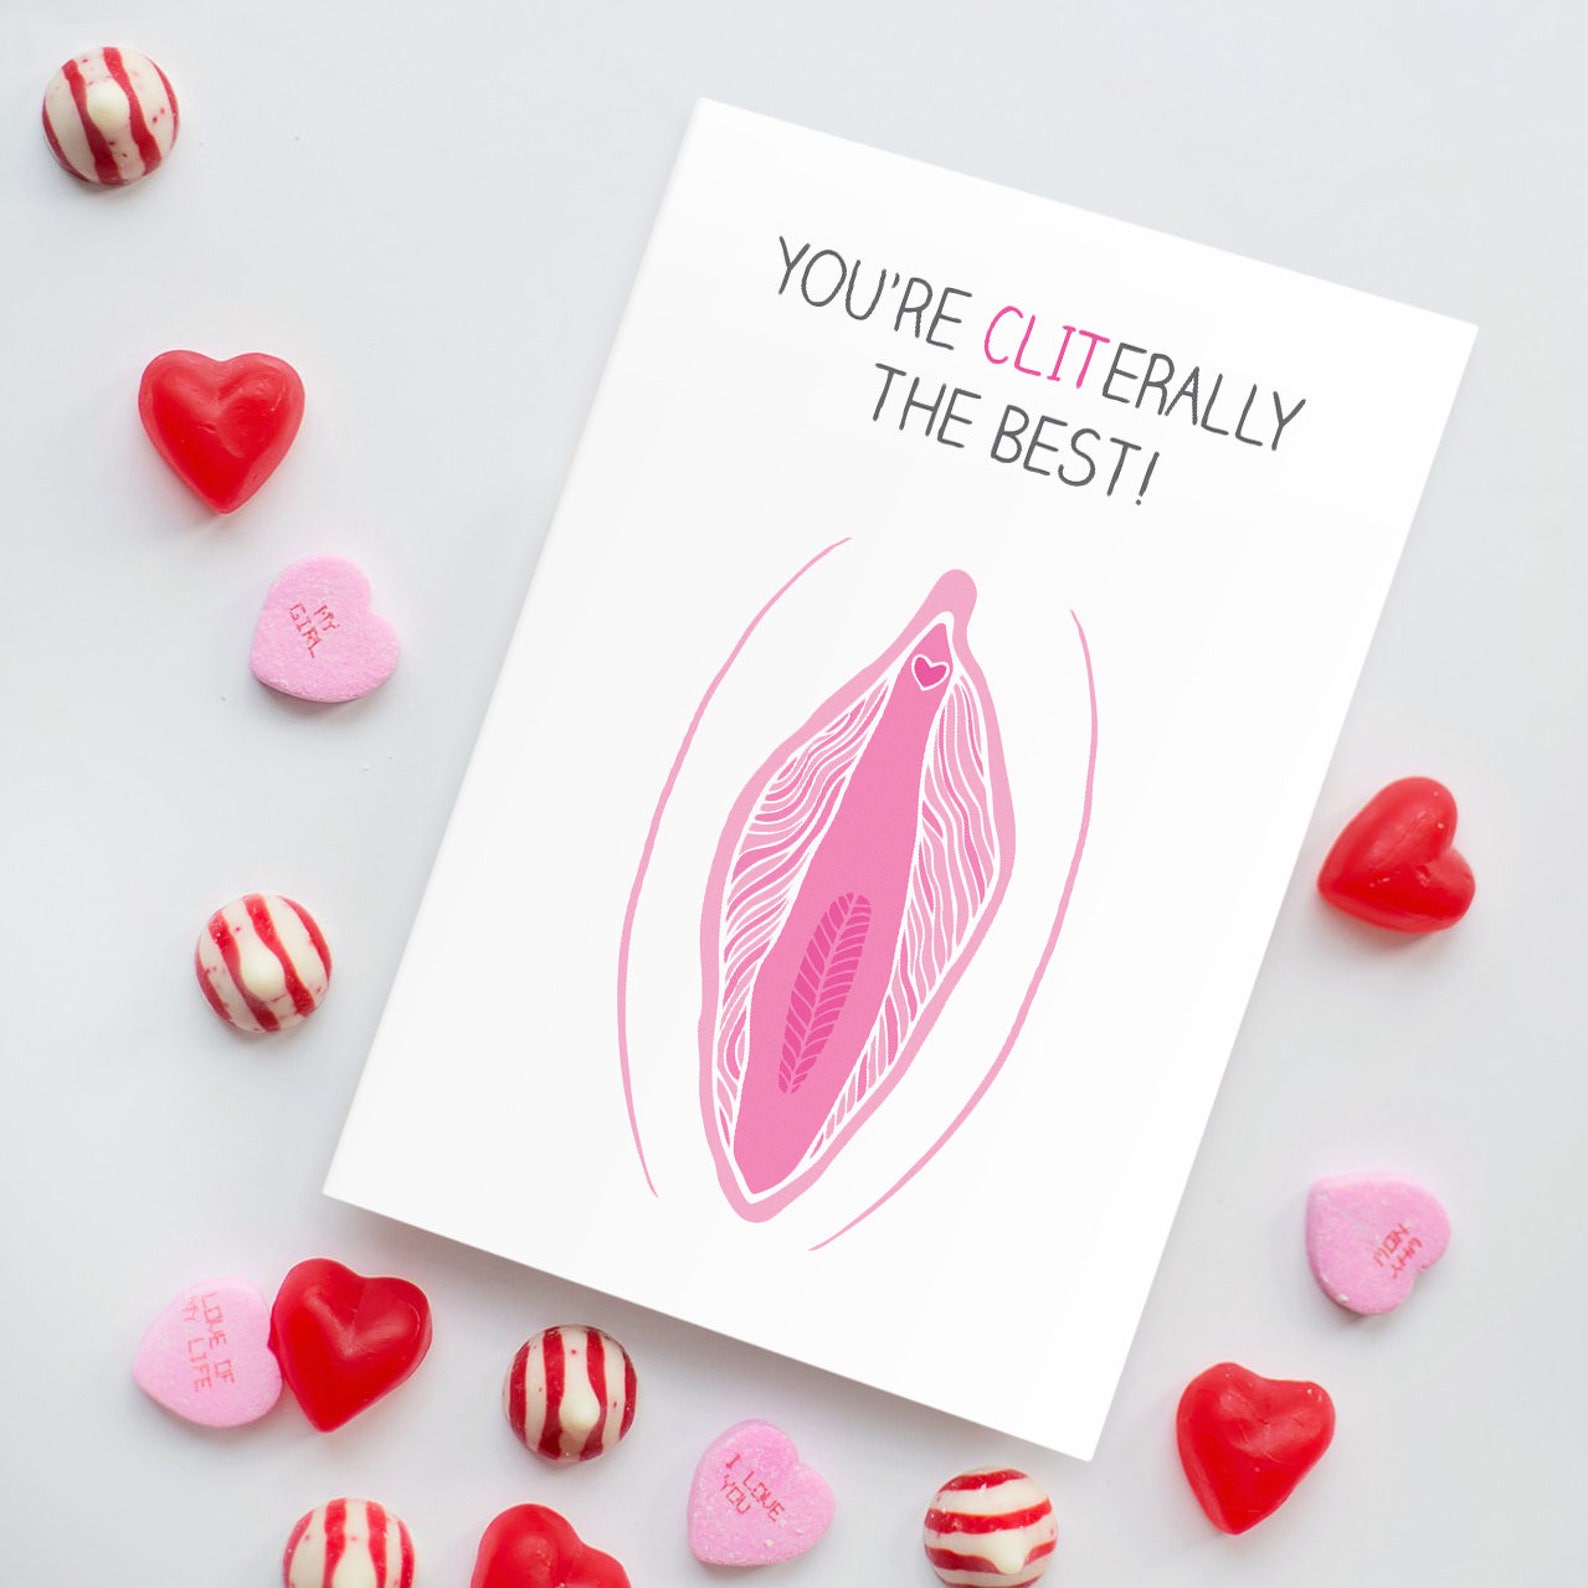 69 Very Naughty Valentine's Cards Guaranteed To Make V